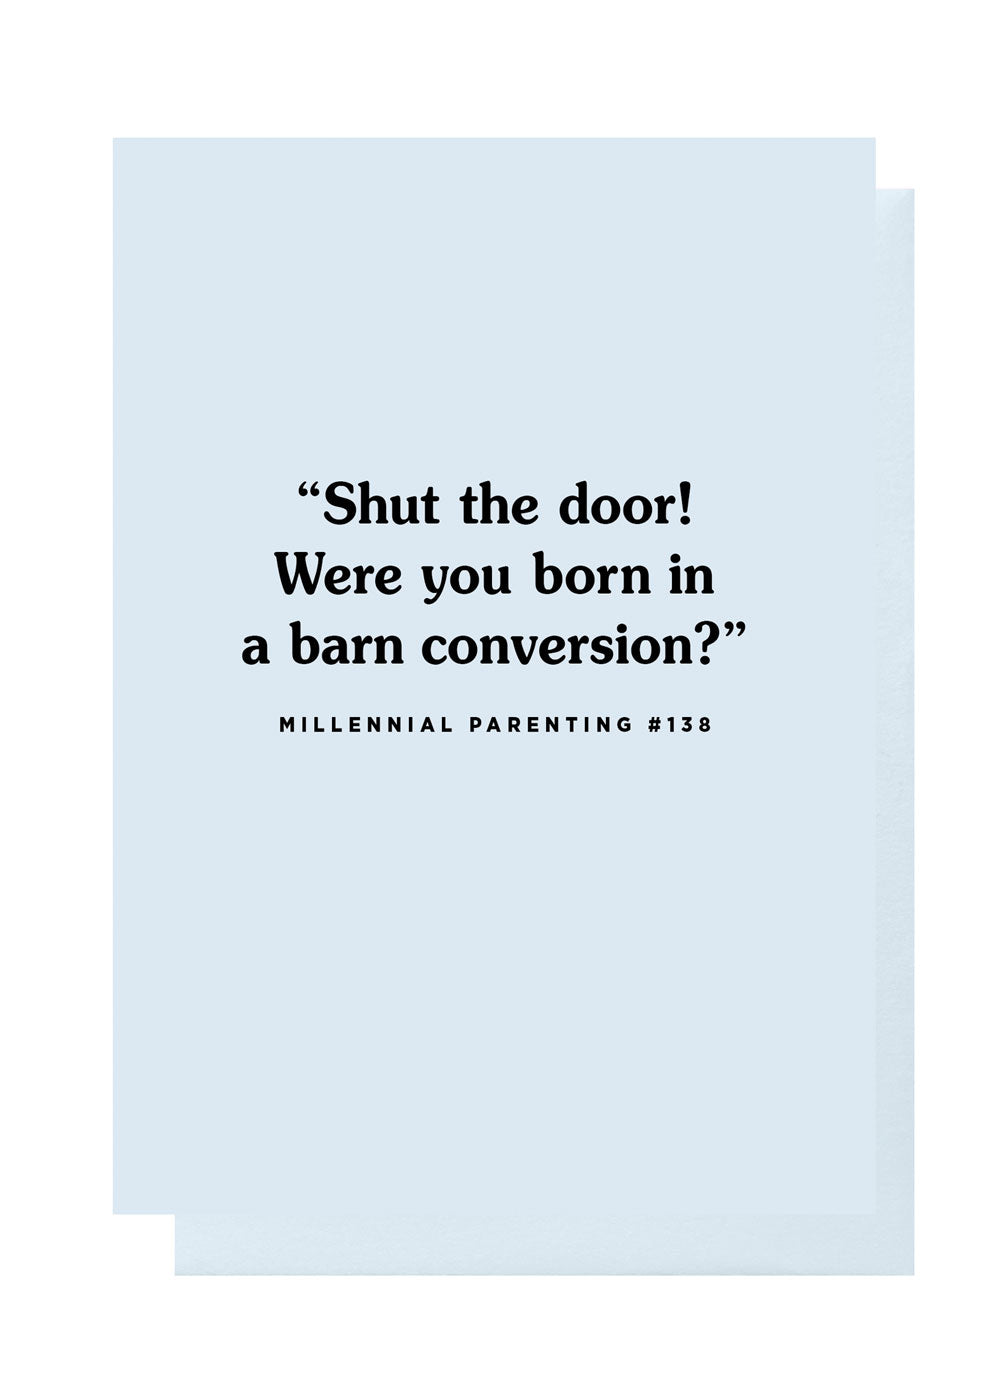 Were You Born In A Barn Conversion Card